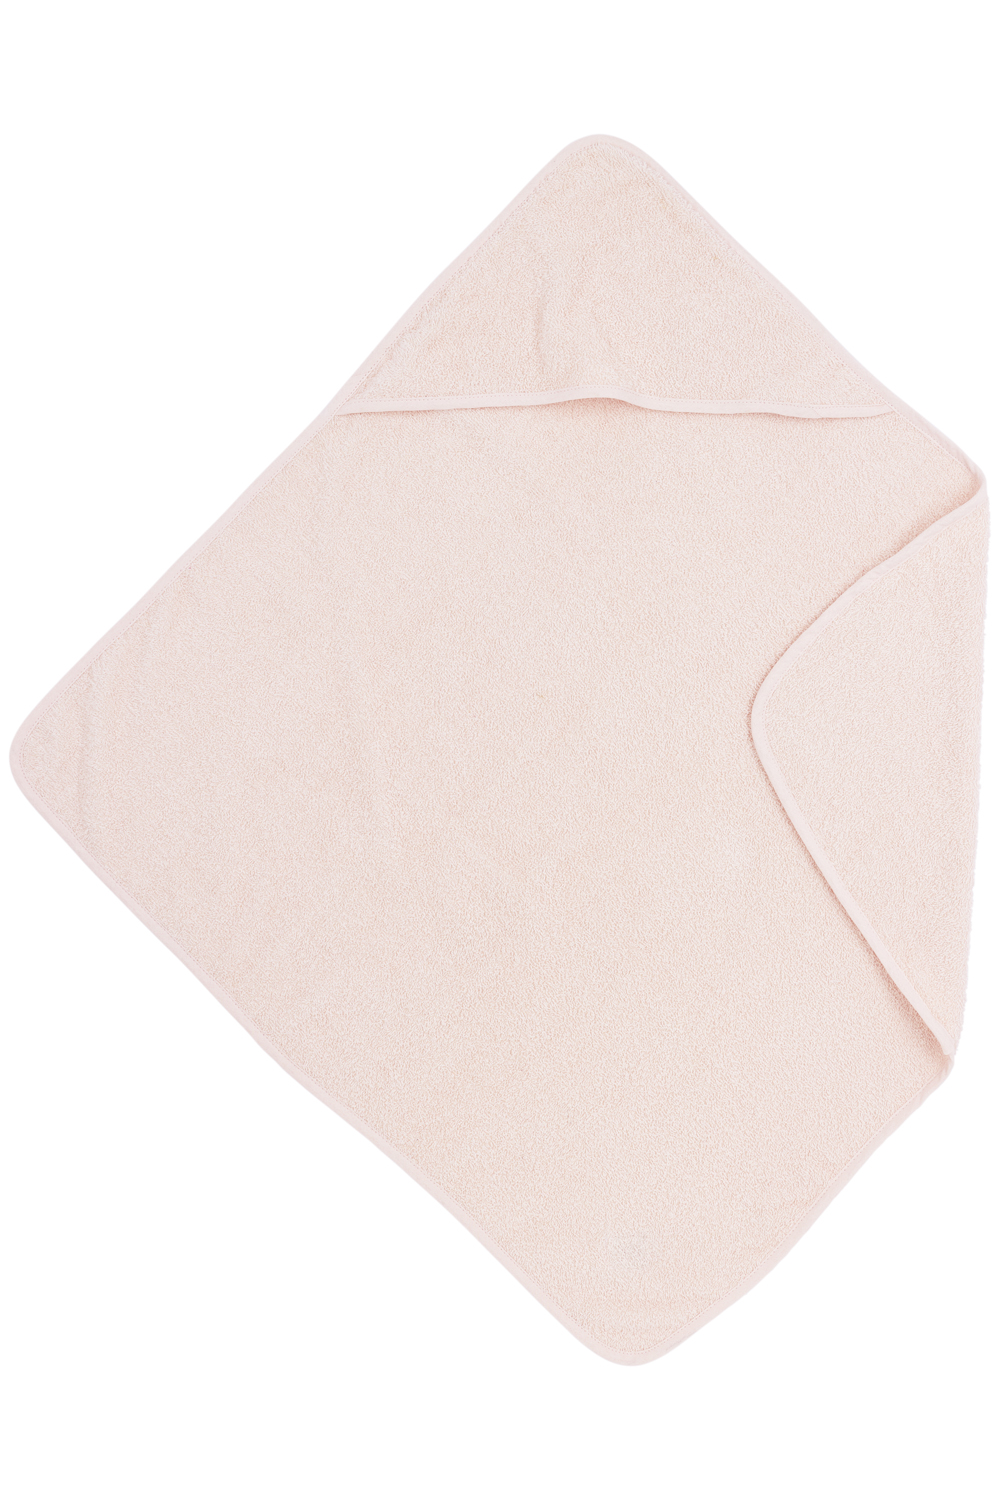 Bathcape Basic Terry - Soft Pink - 75x75cm